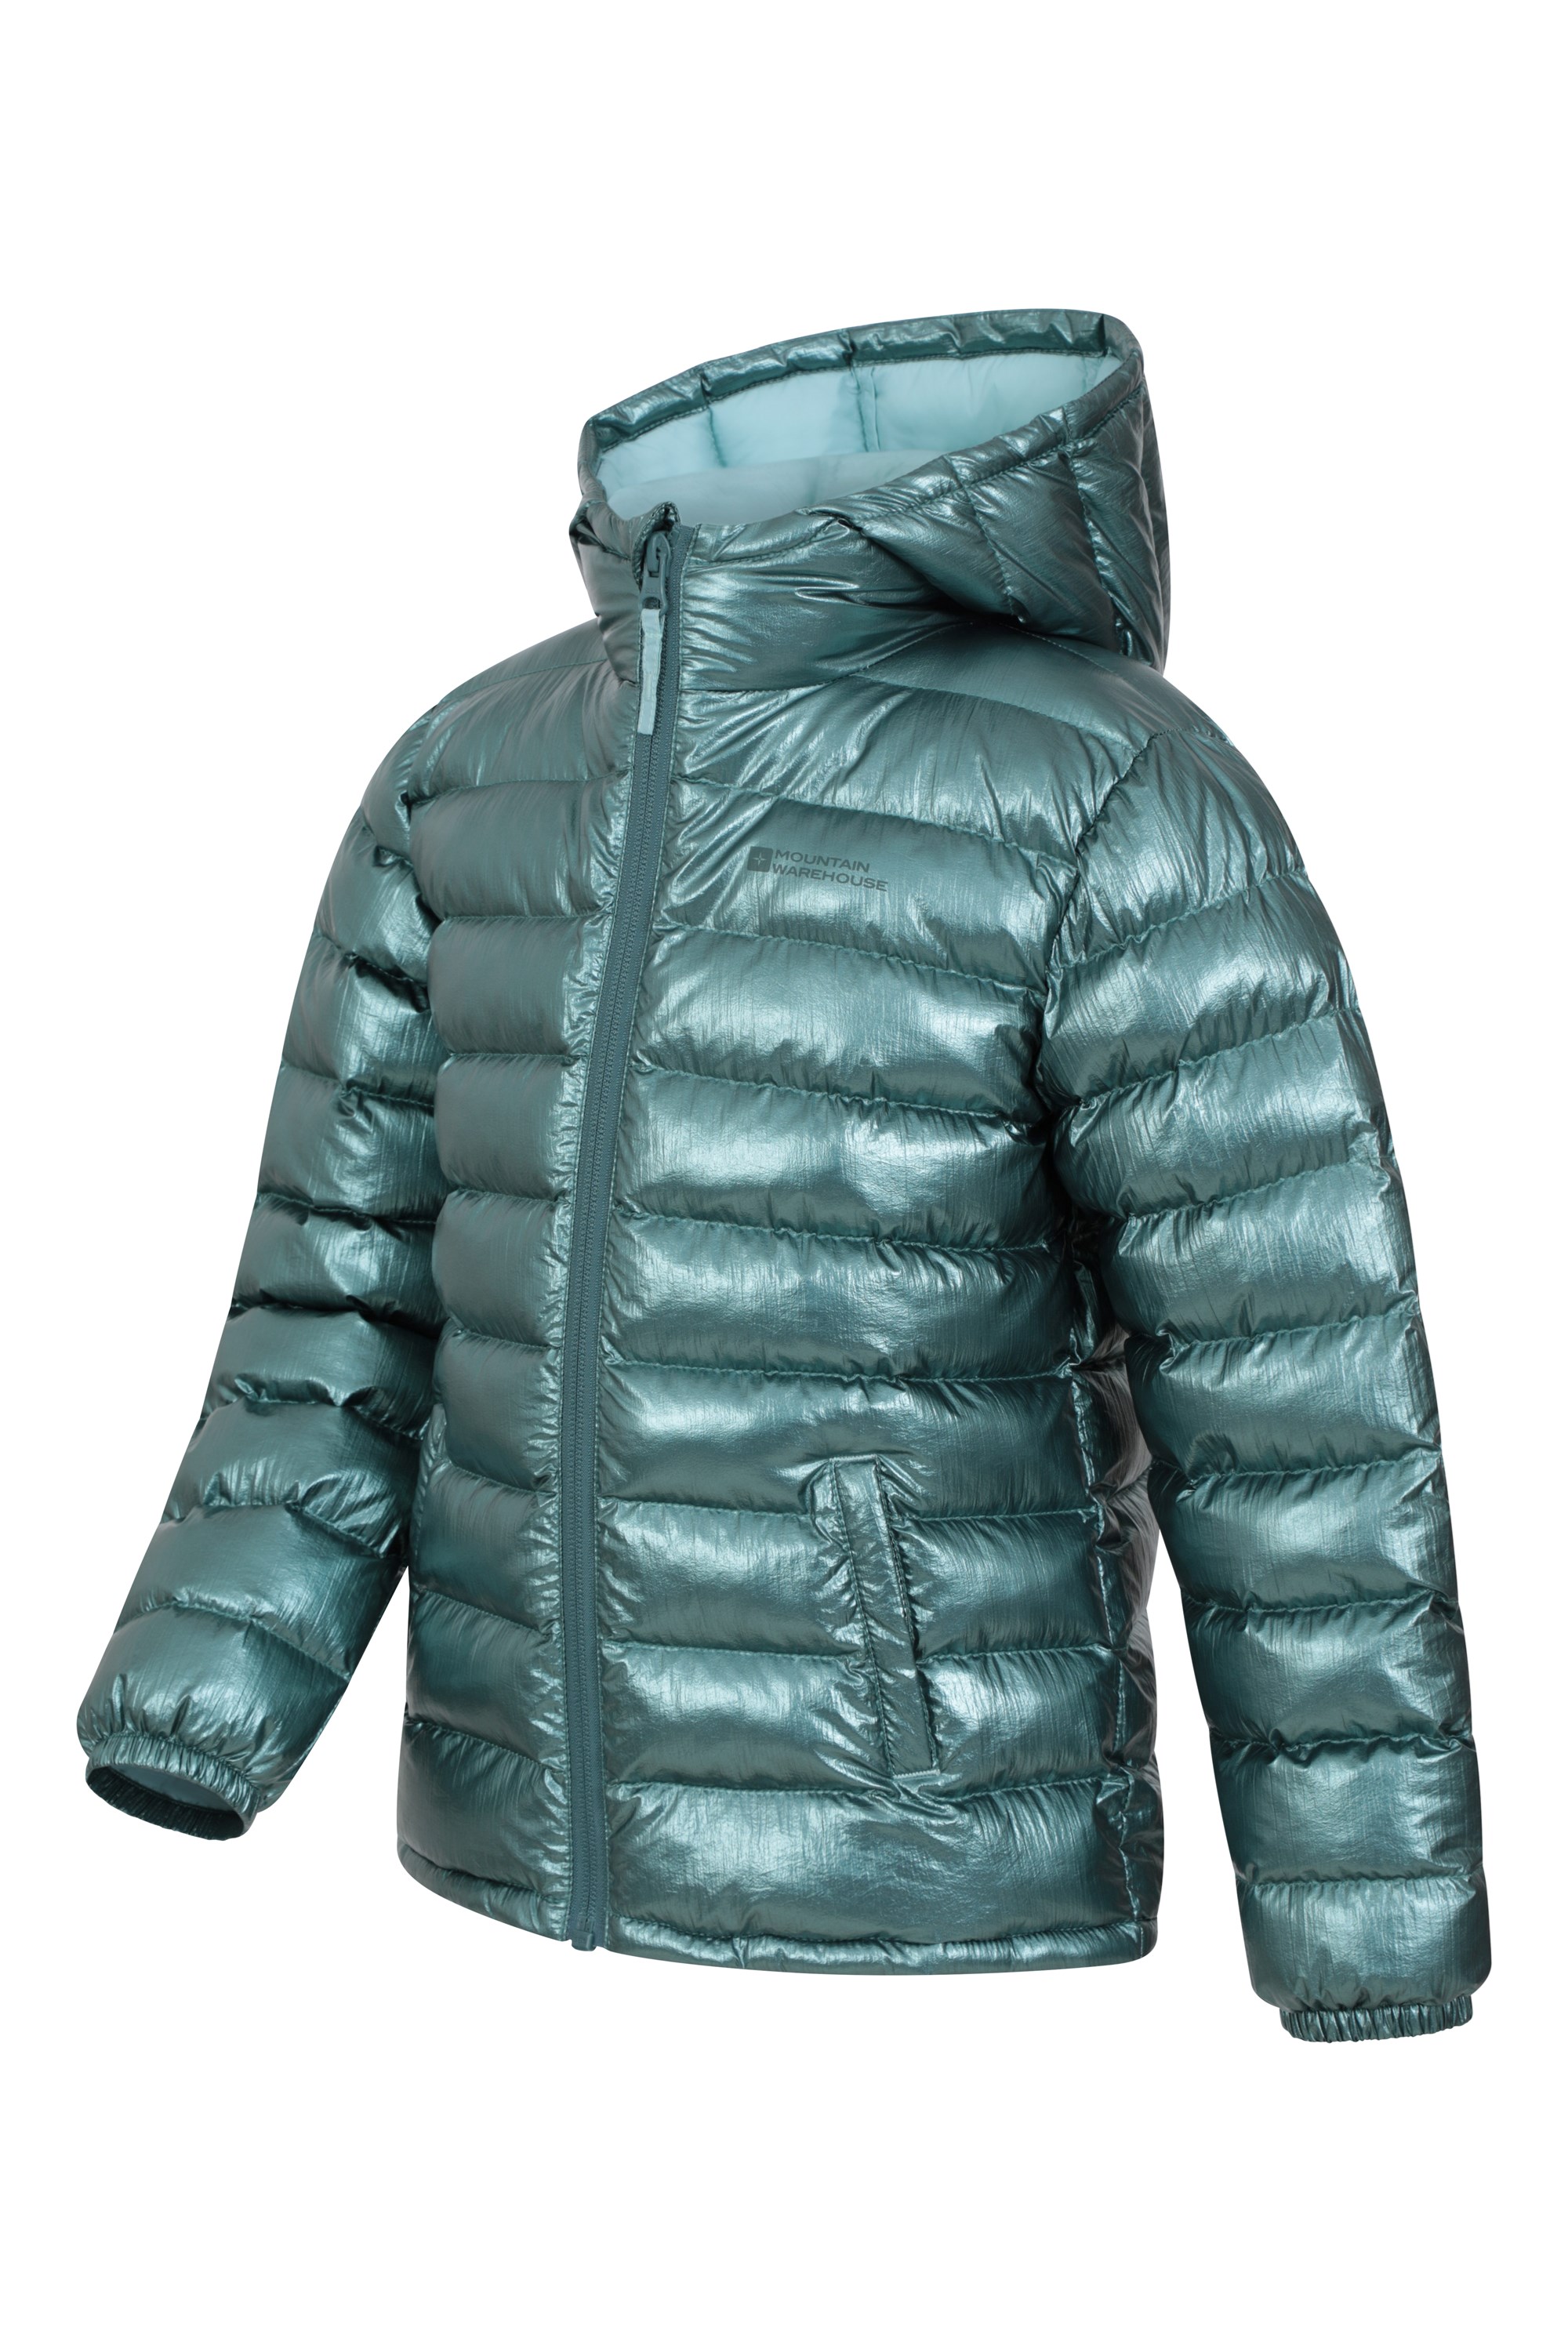 Mountain Warehouse Colourblock Seasons Kids Padded Jacket Insulated 